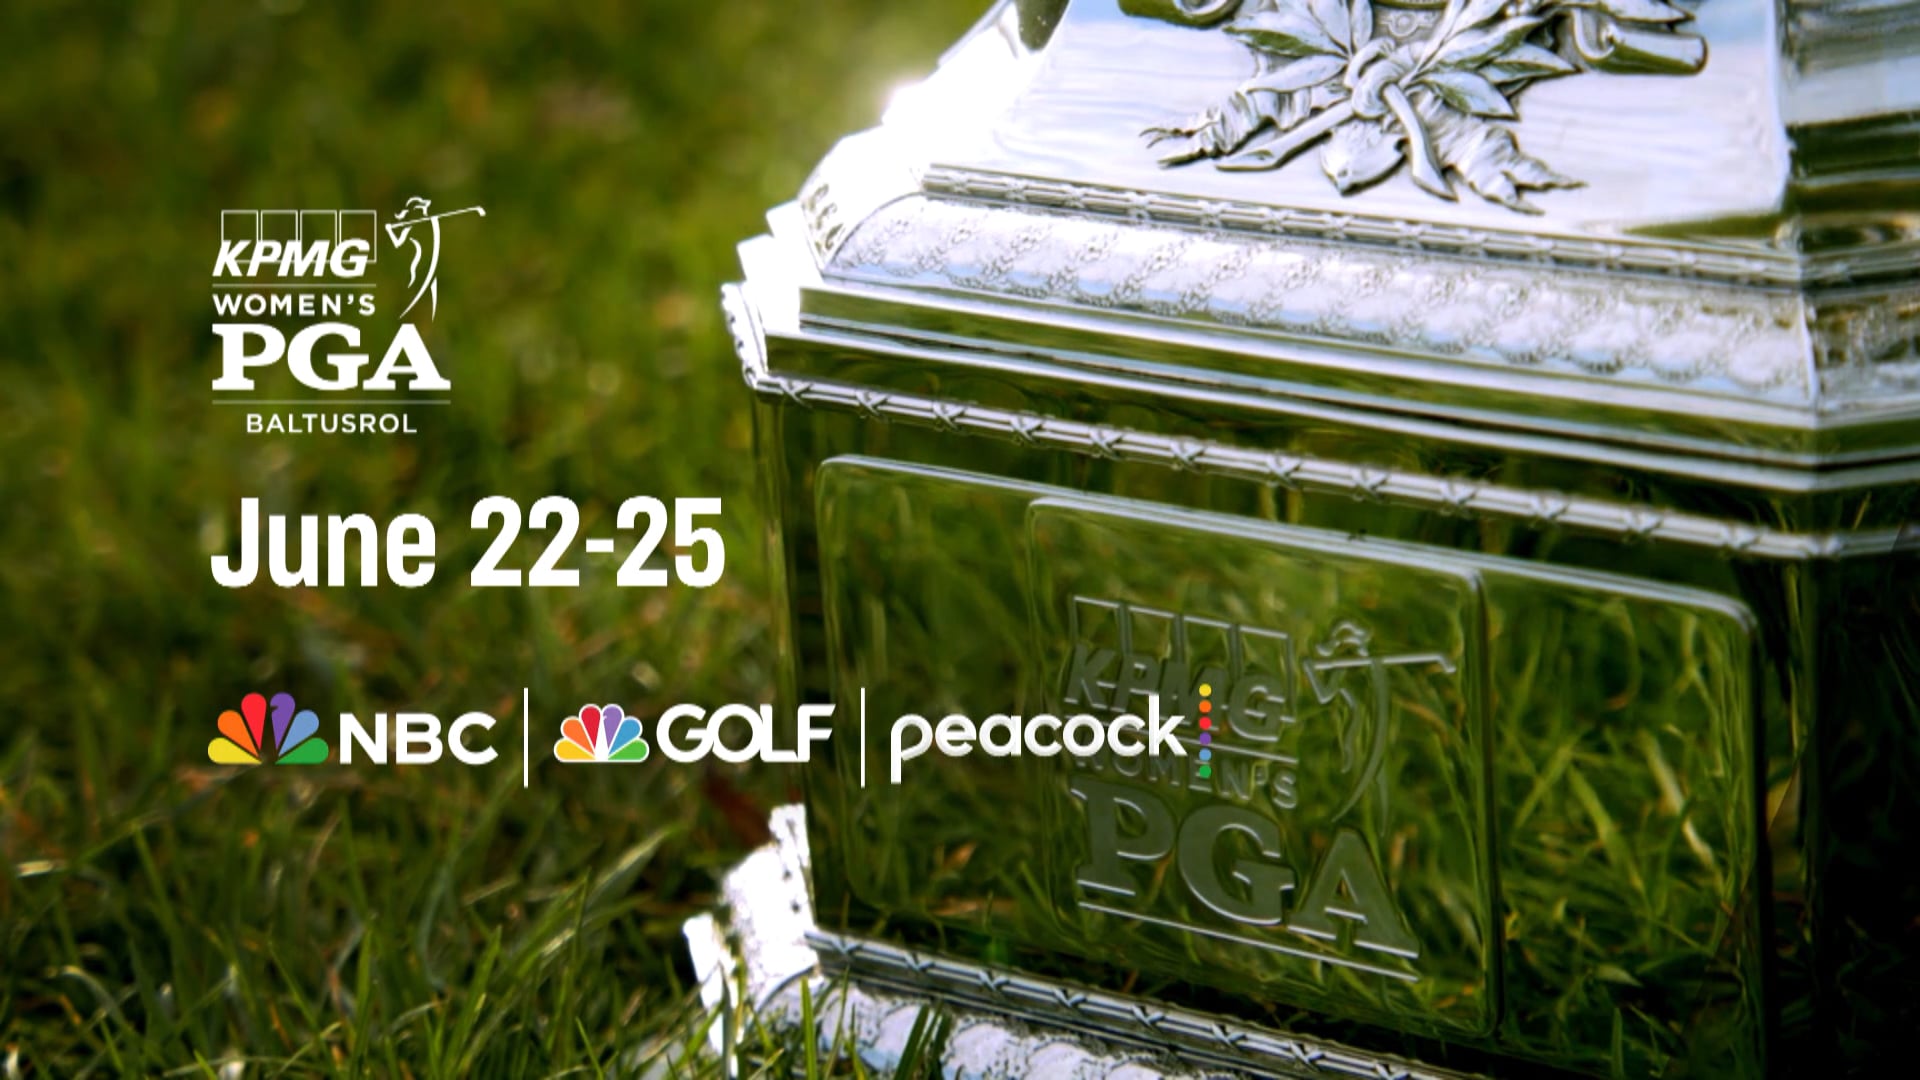 2023 KPMG Womens PGA 30 Golf Channel/NBC Tune in (May/June 2023) on Vimeo